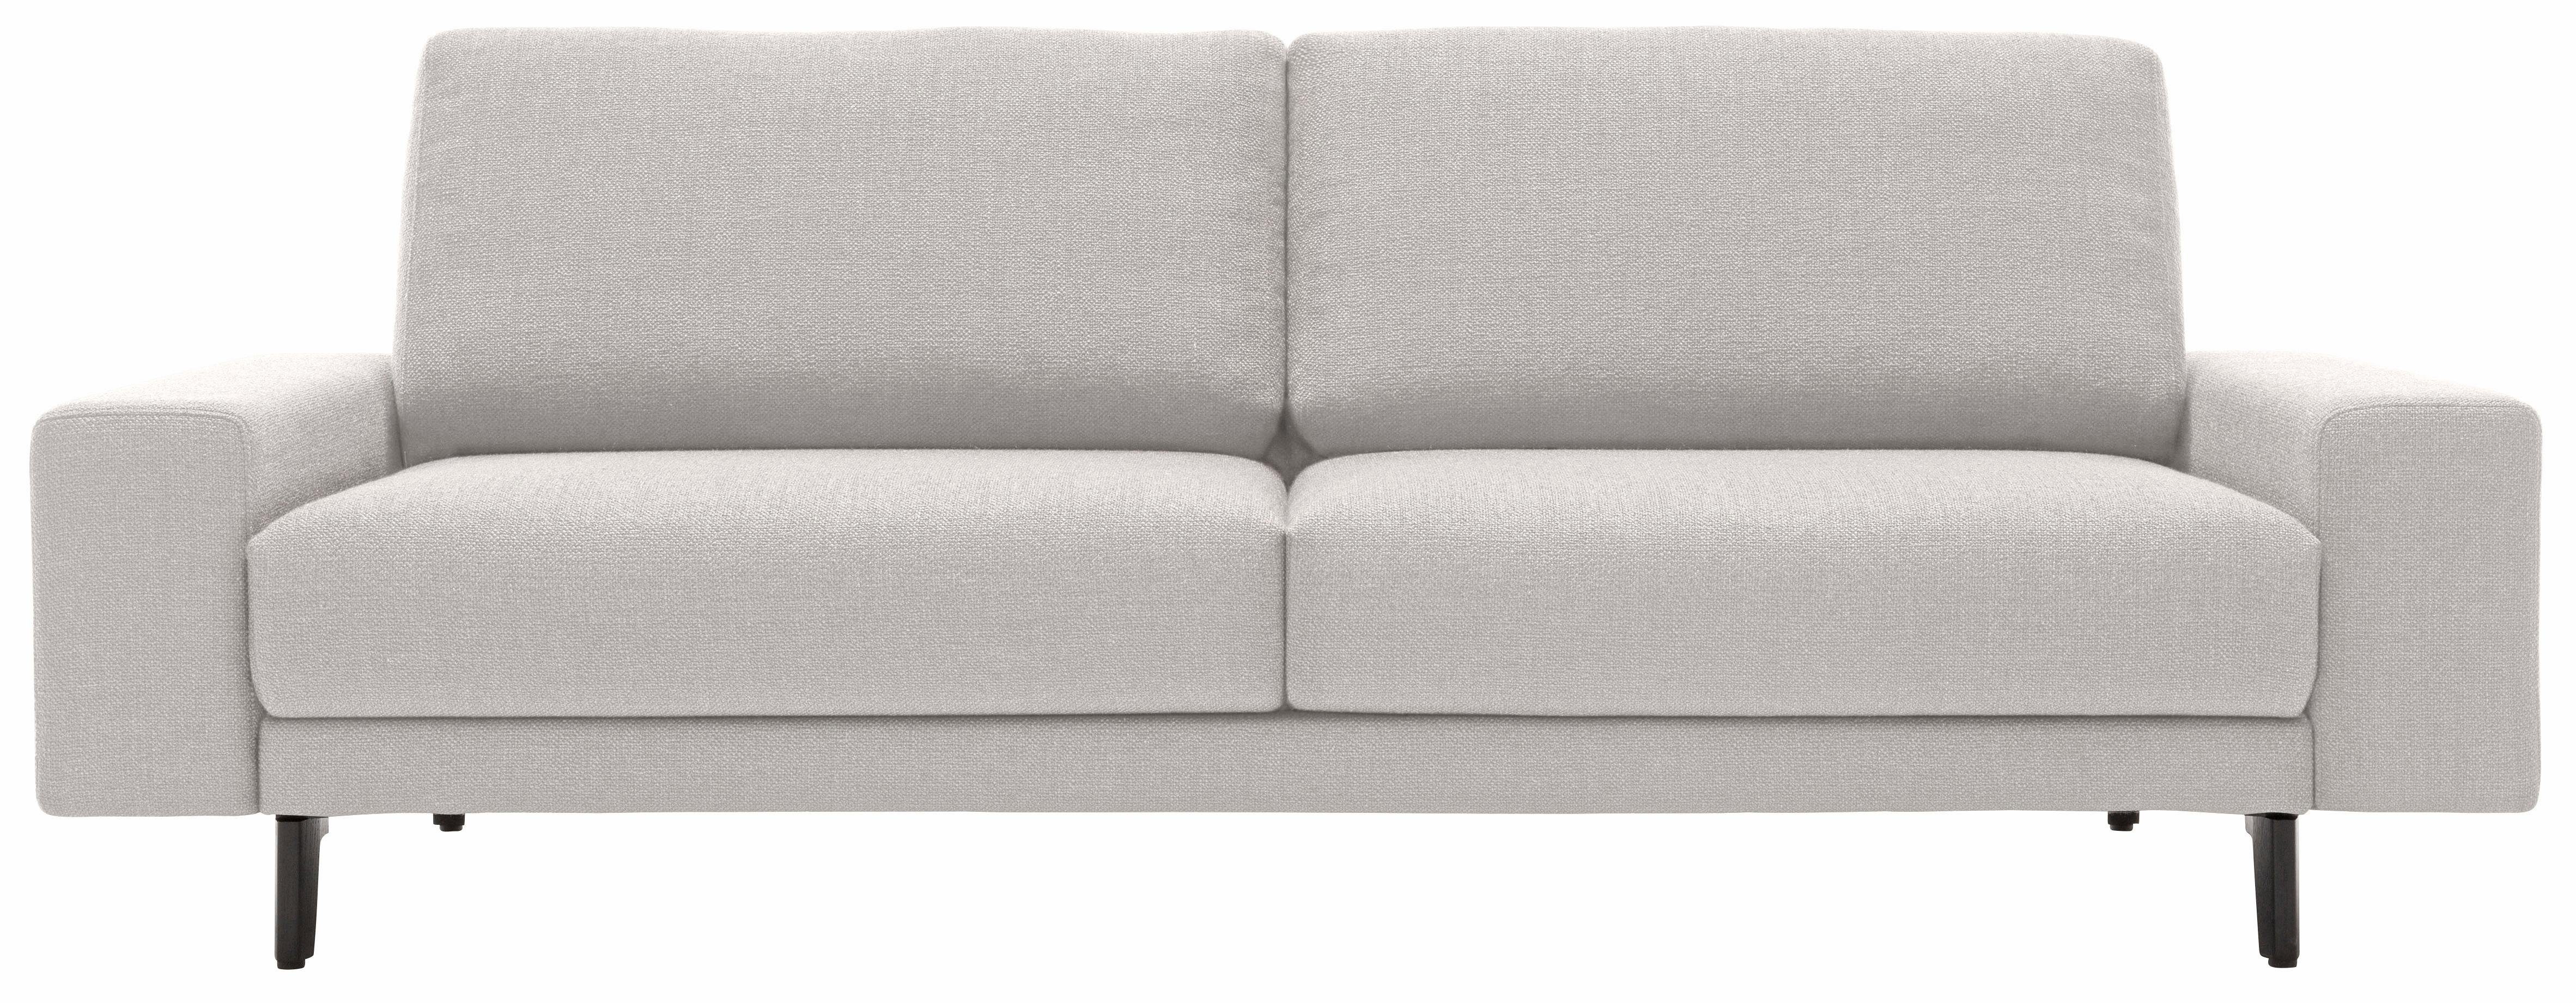 Breite in cm hs.450, niedrig, hülsta breit Alugussfüße sofa Armlehne umbragrau, 2-Sitzer 180